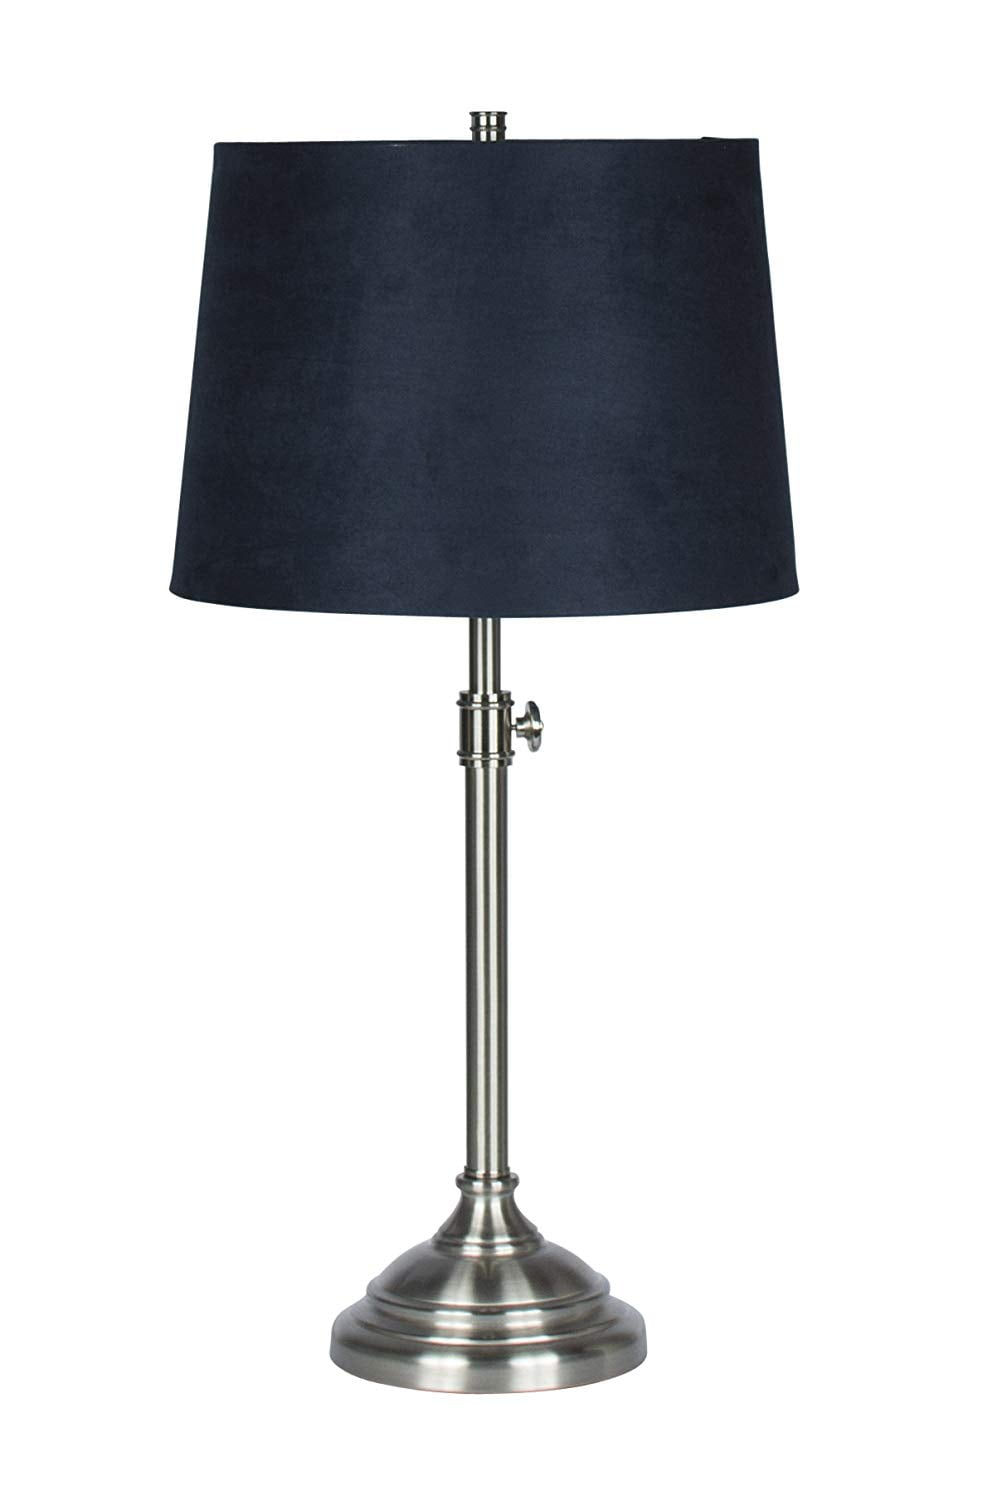 Urbanest Windsor Adjustable Table Lamp Brushed Nickel Finish Lamp